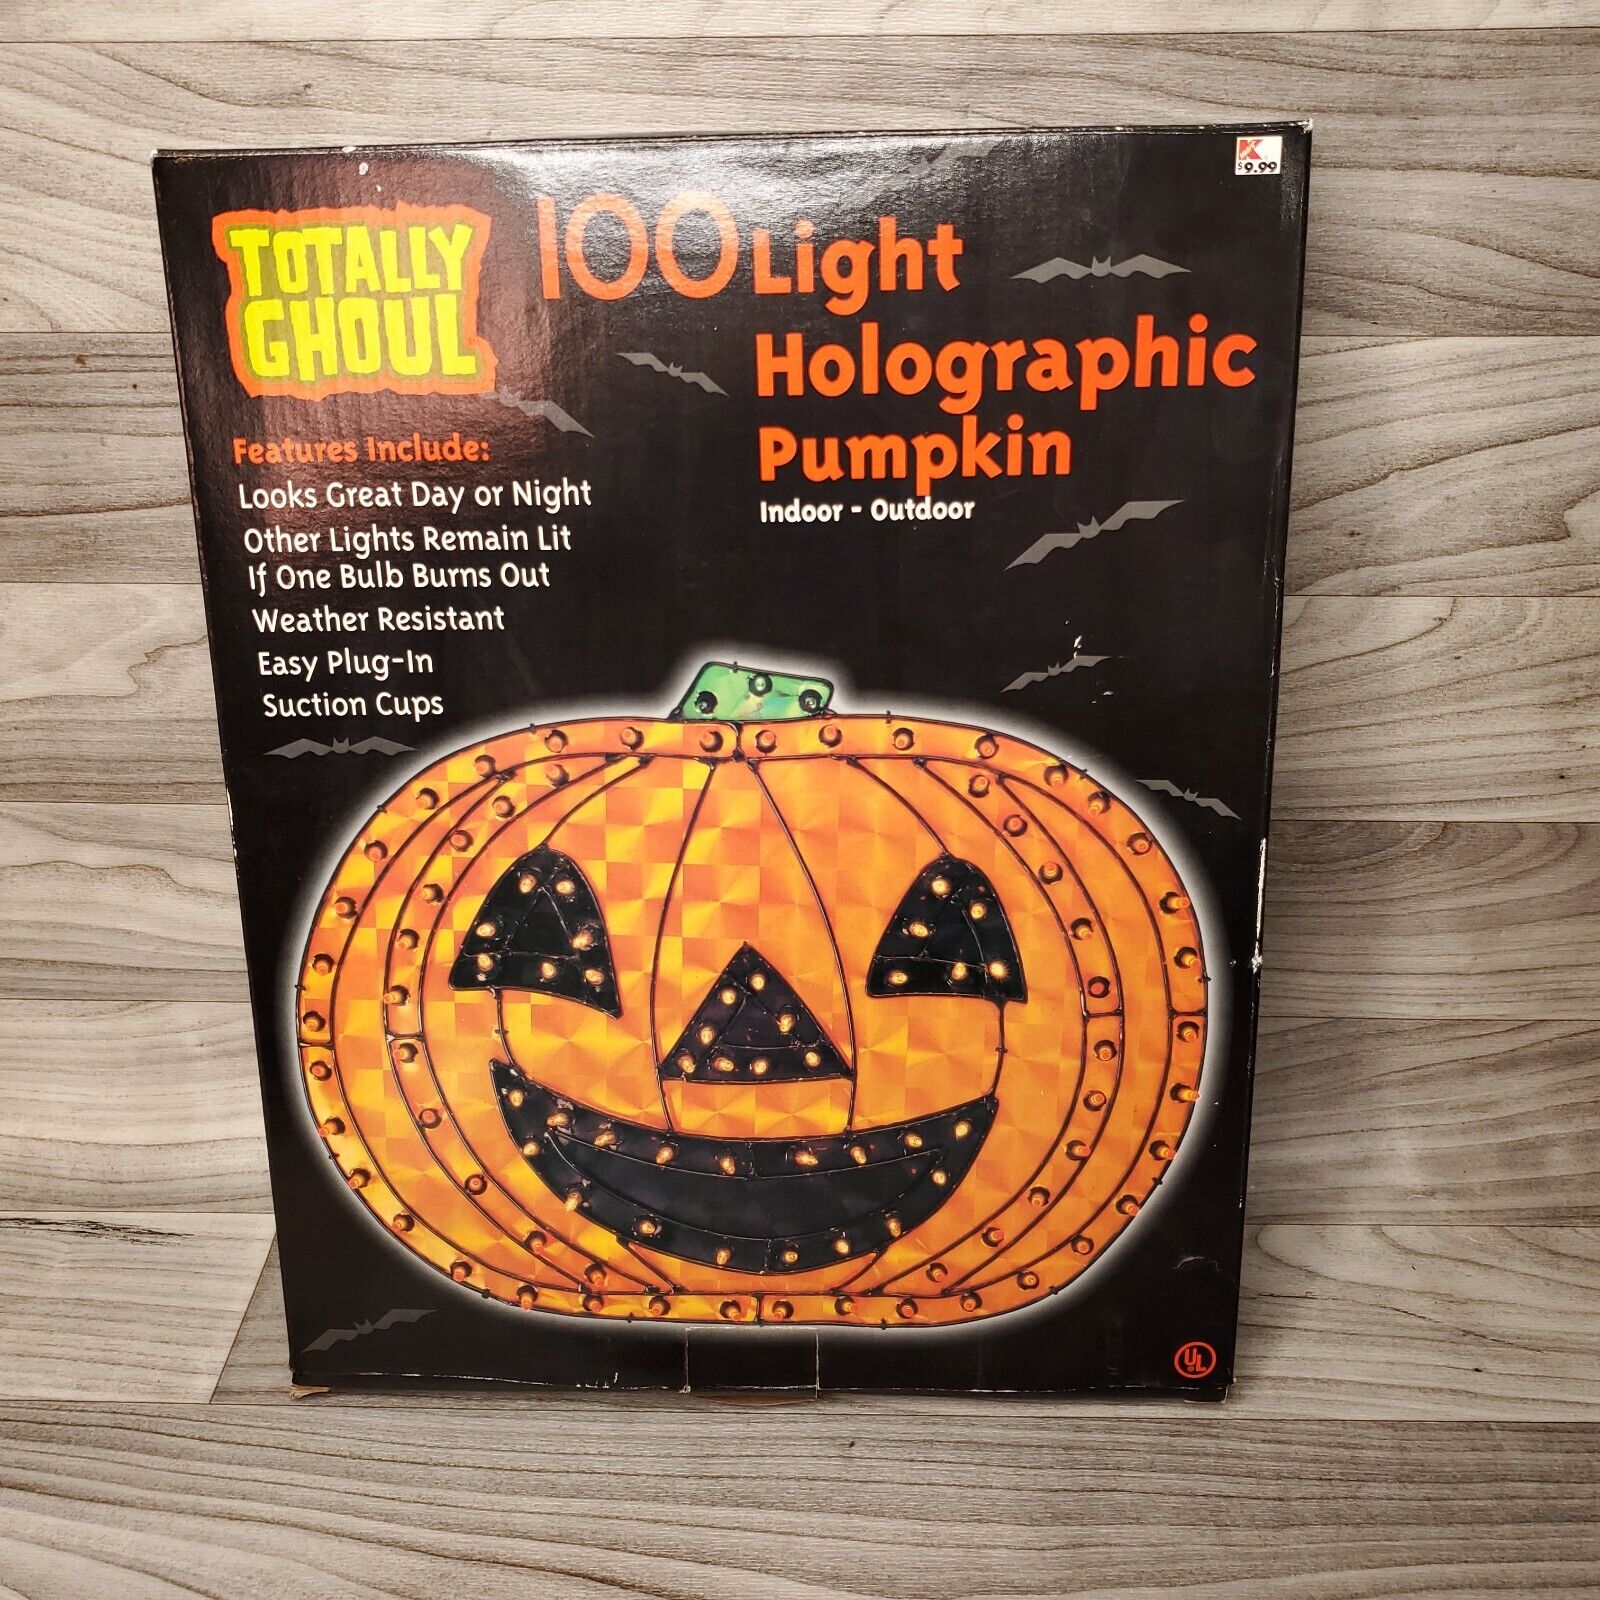 Vtg Kmart Totally Ghoul Holographic Pumpkin Halloween Decor 100 Lights Pumpkin